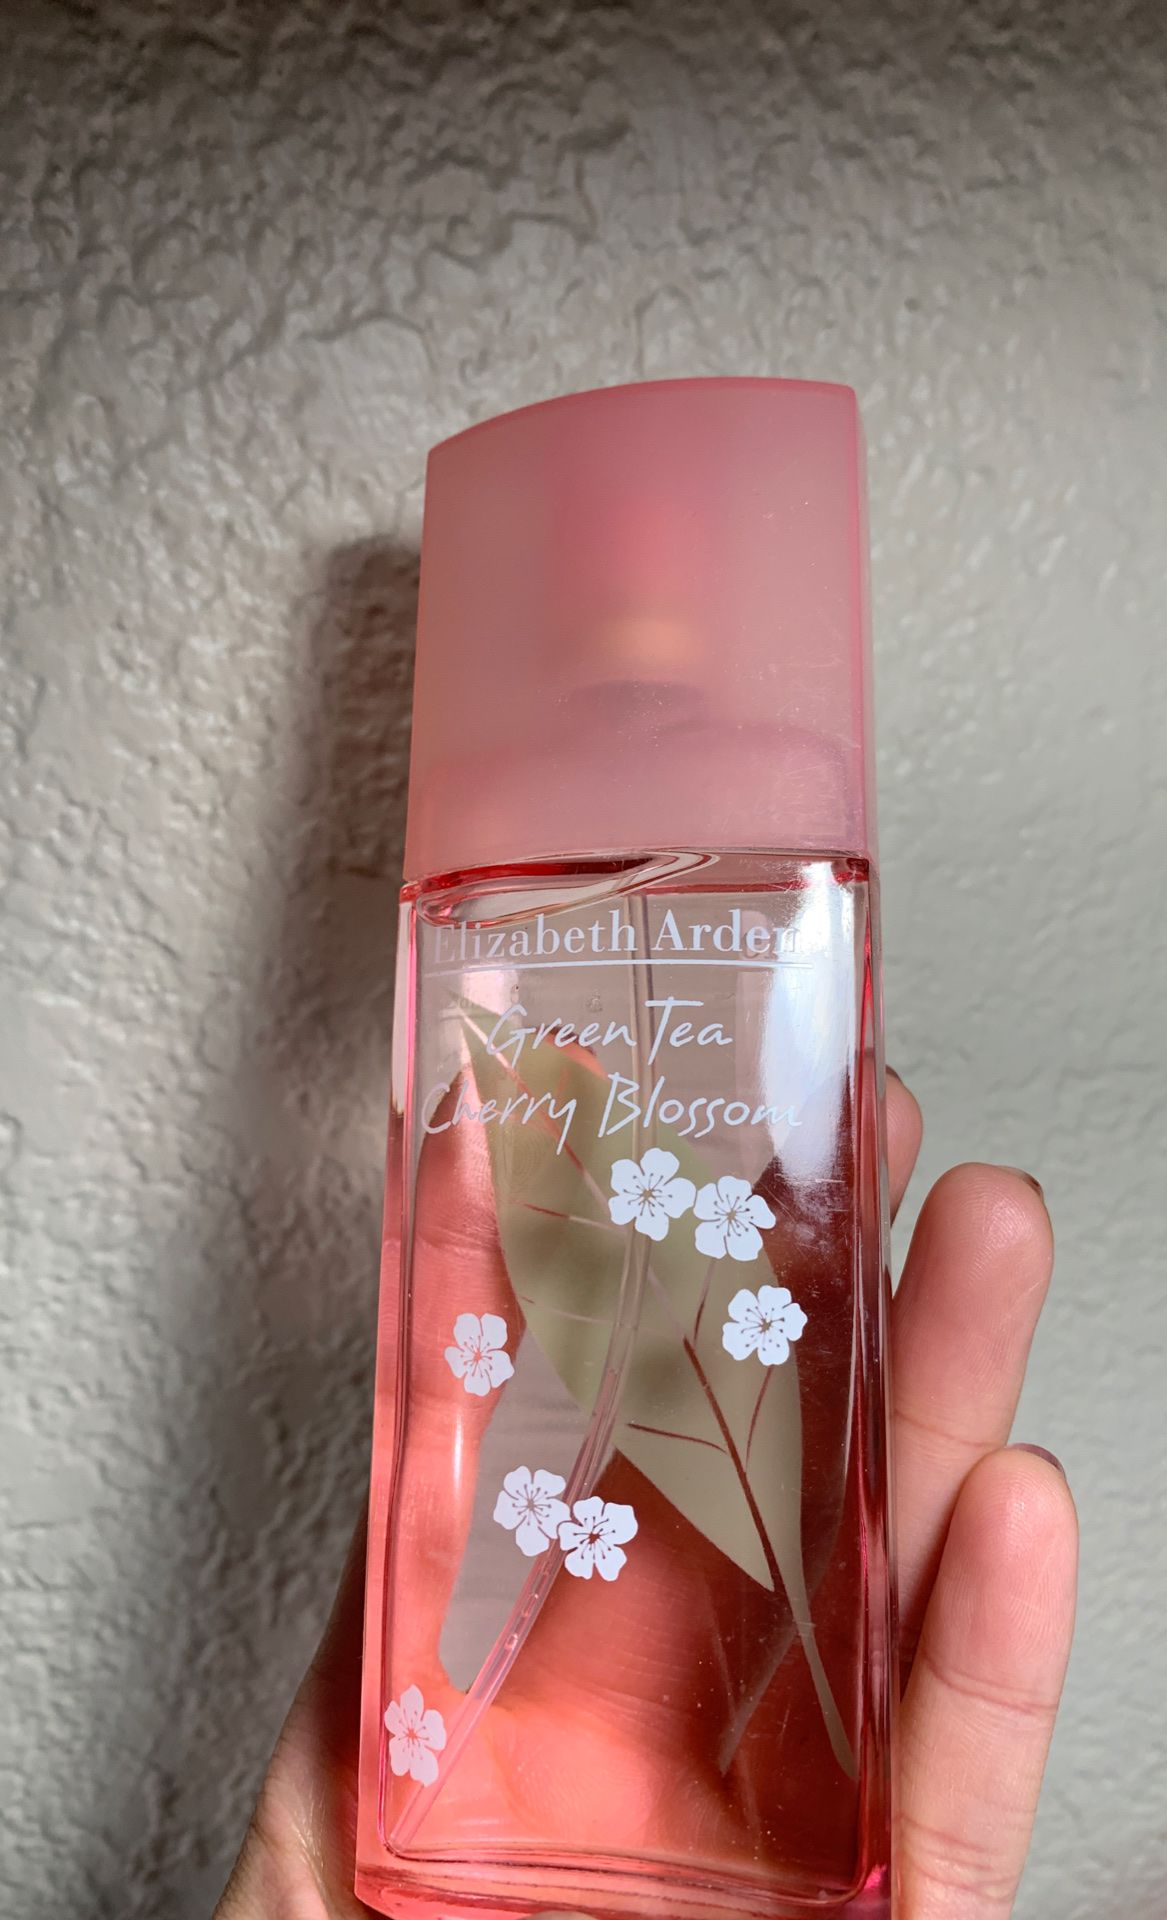 Elizabeth Arden greentea cherry blossom perfume